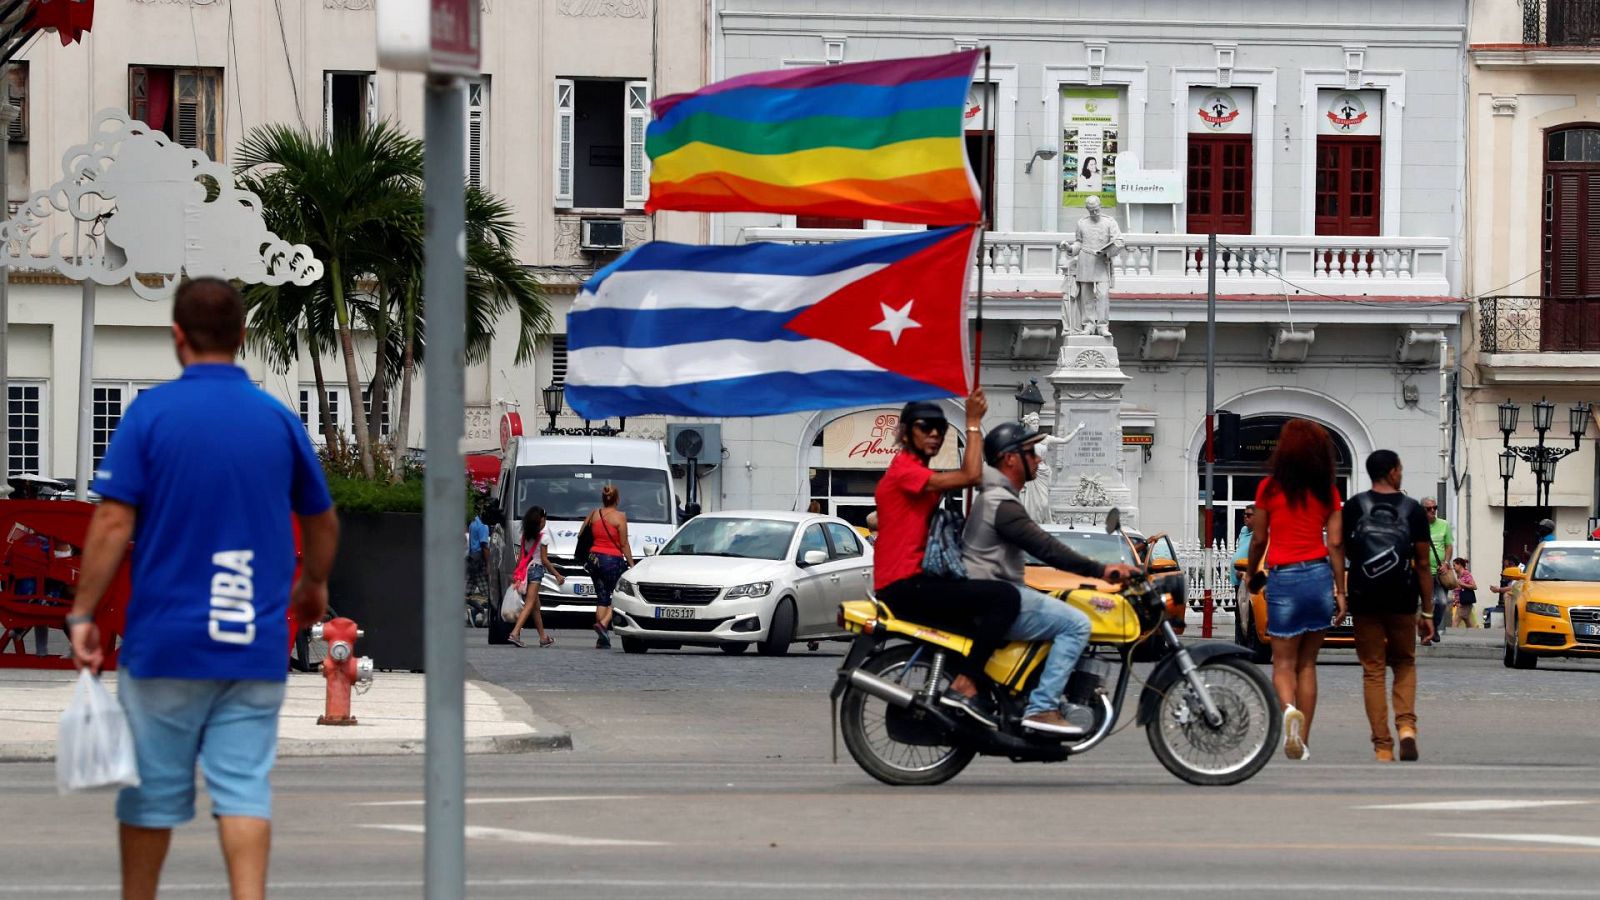 Reportajes 5 continentes - Cuba abre la puerta al matrimonio homosexual - Escuchar ahora